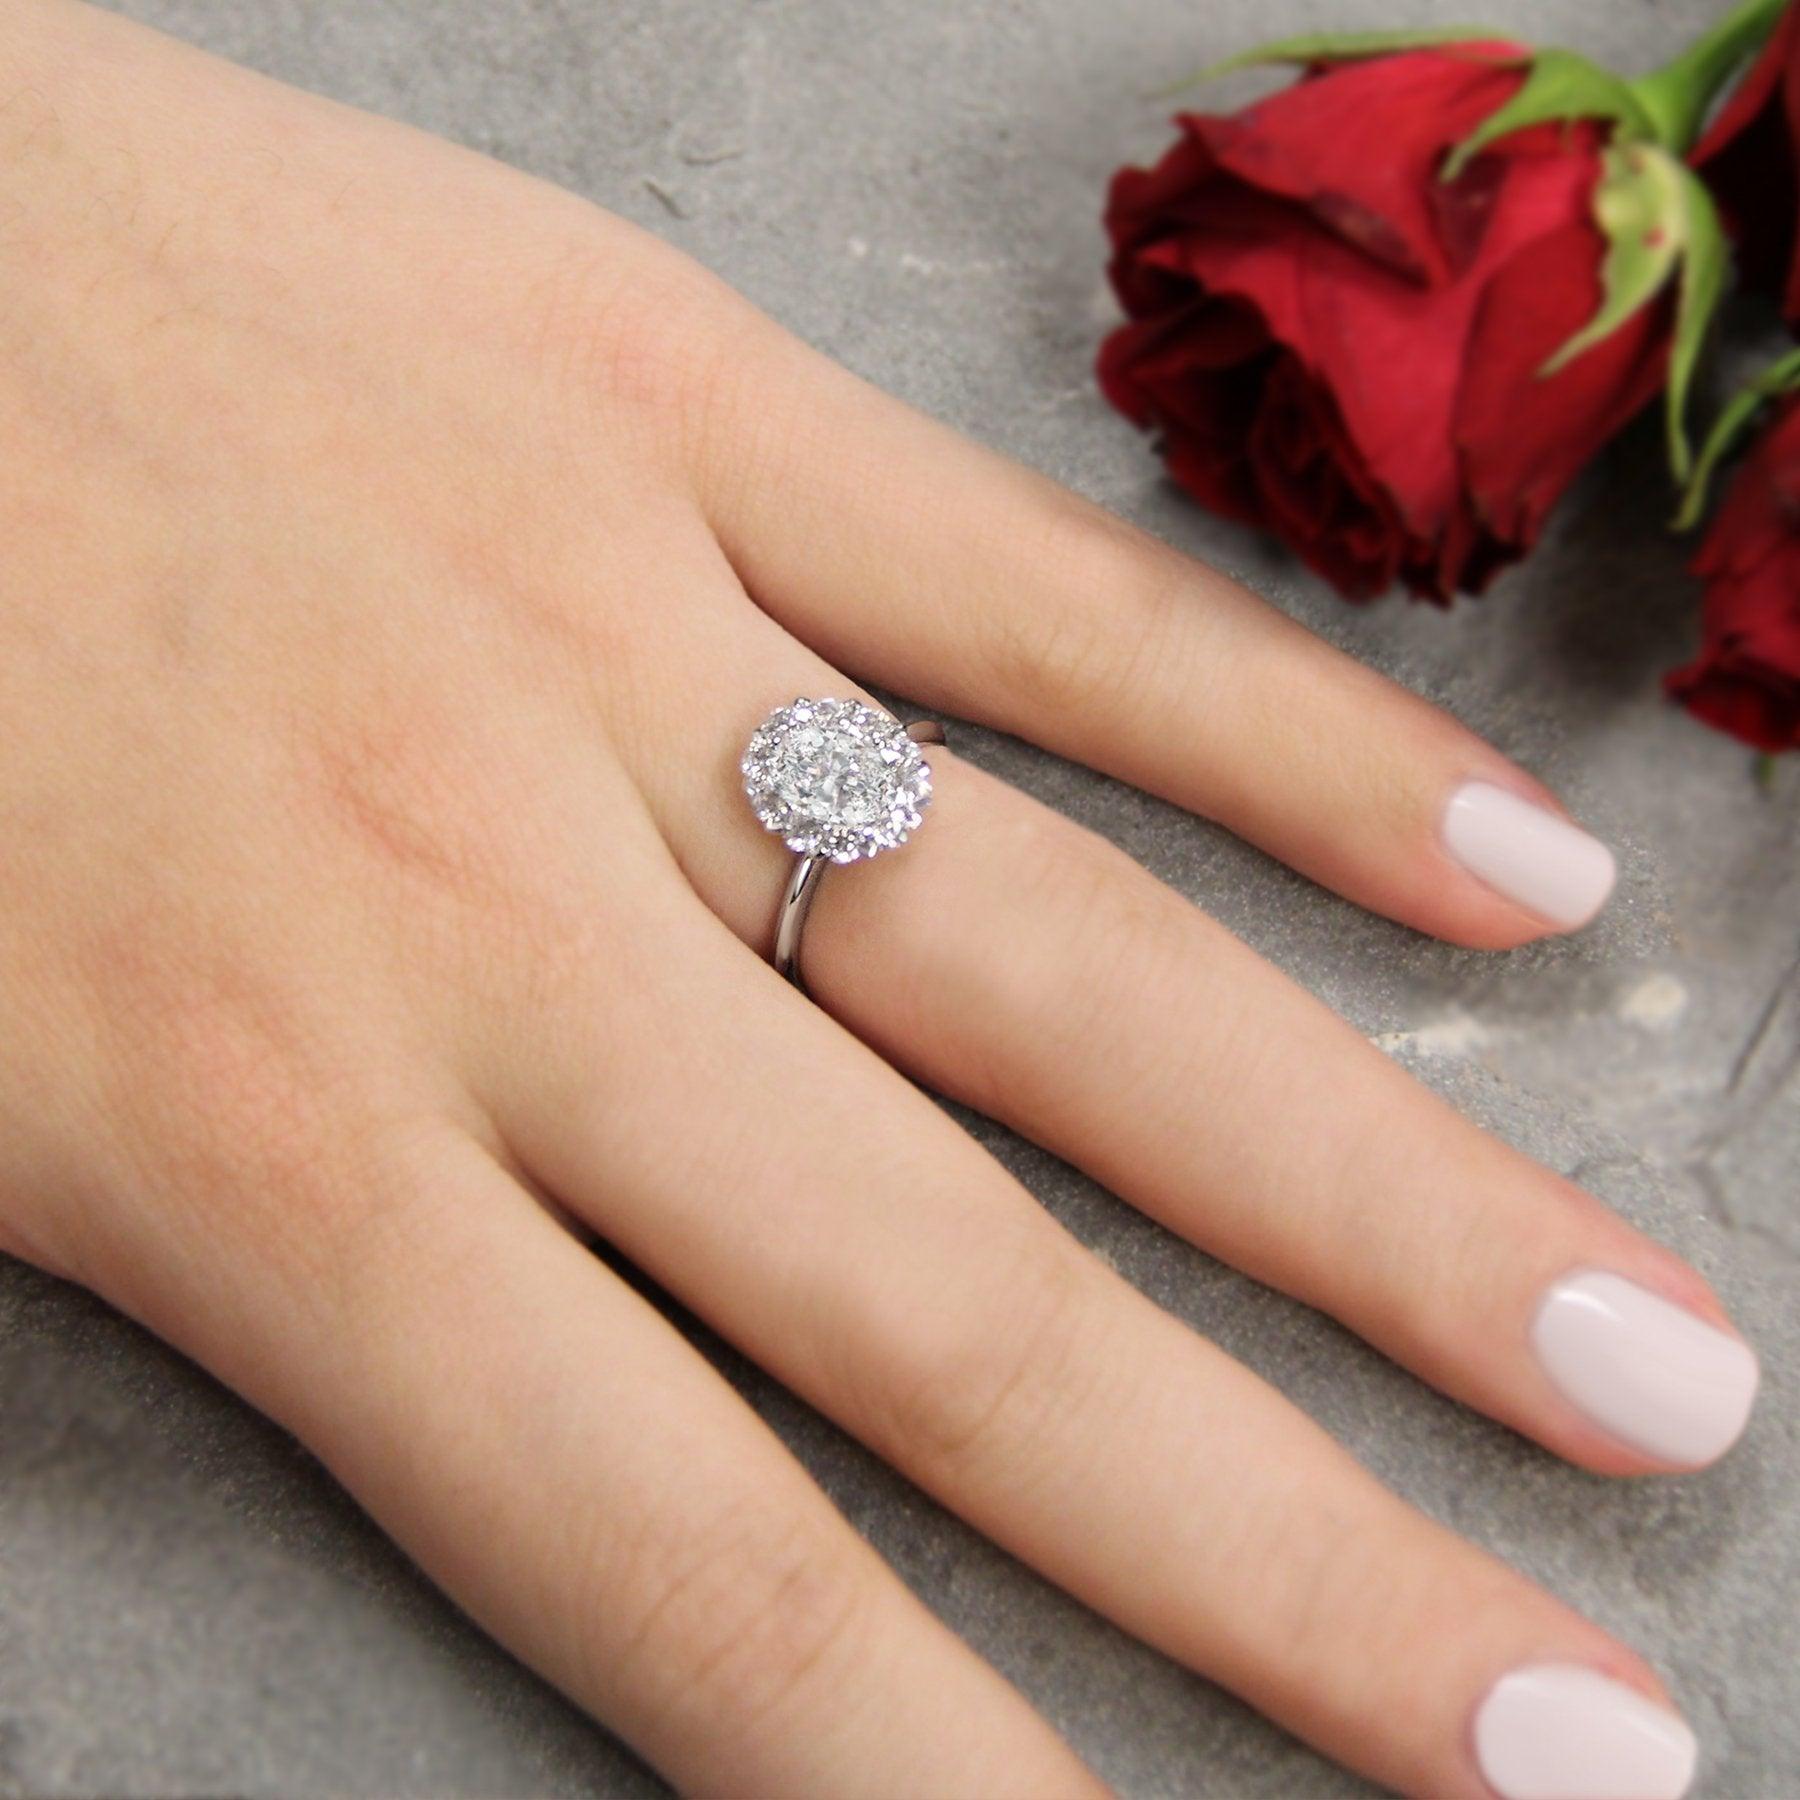 BW JAMES Engagement Rings "The Atlanta"  Halo Semi-Mount Diamond Ring